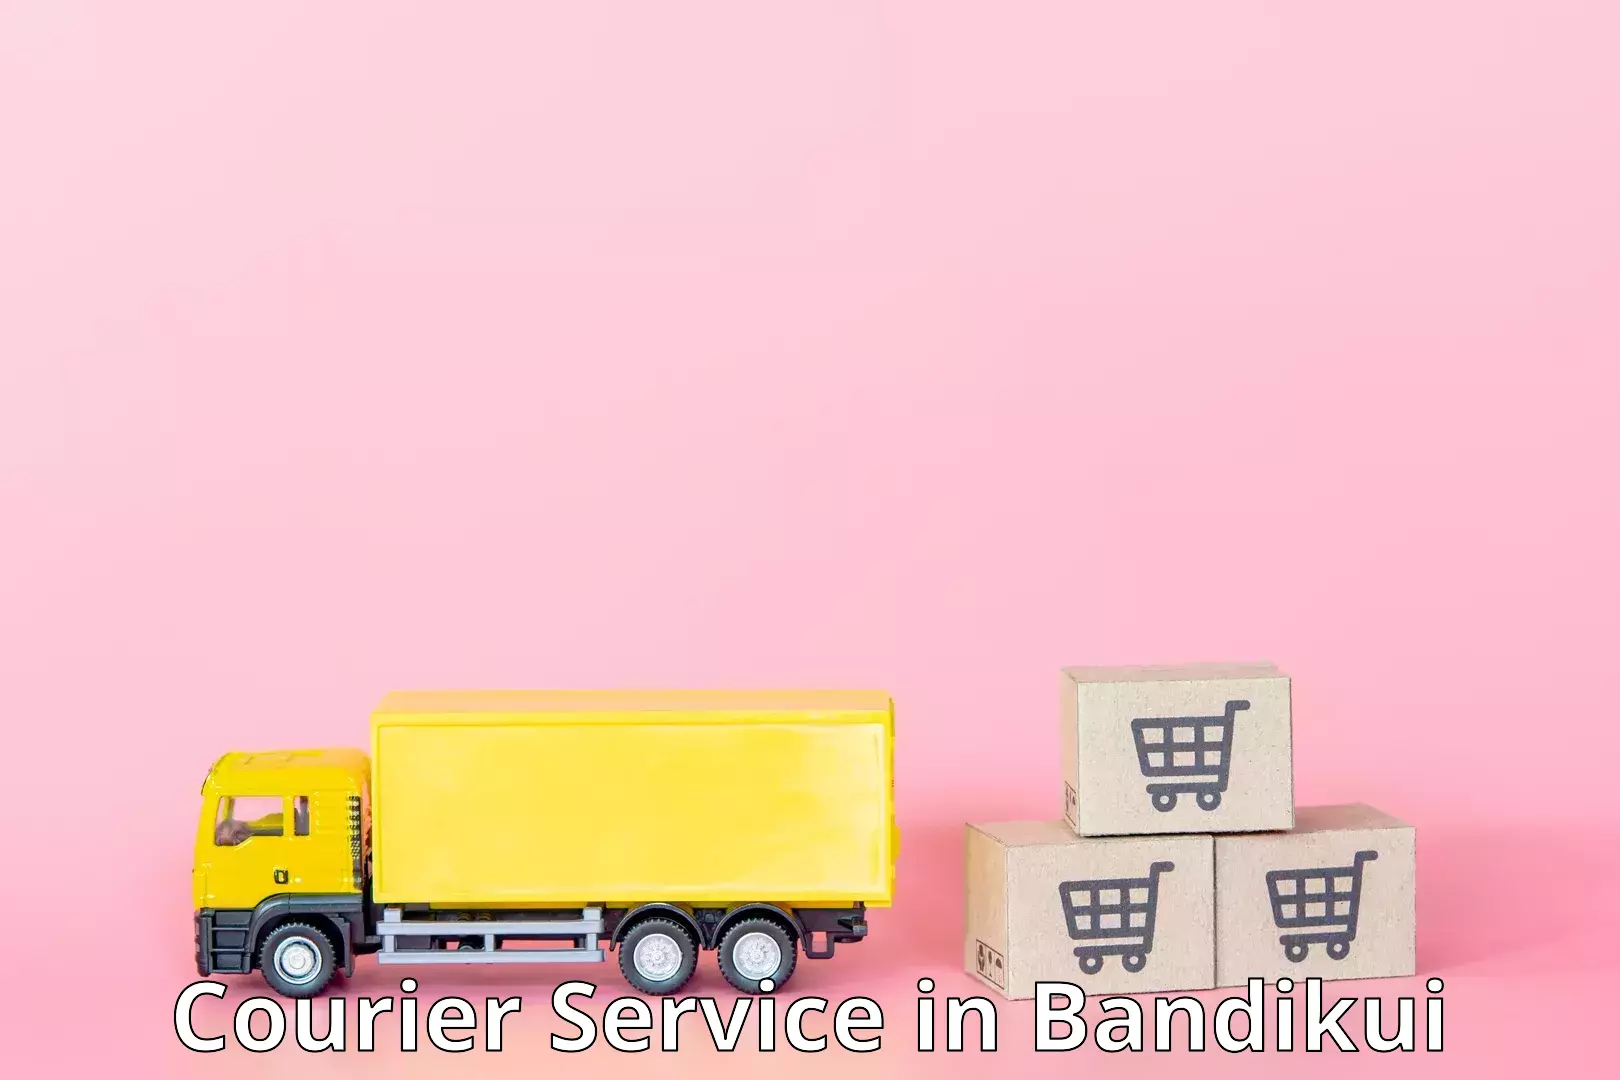 High value parcel delivery in Bandikui